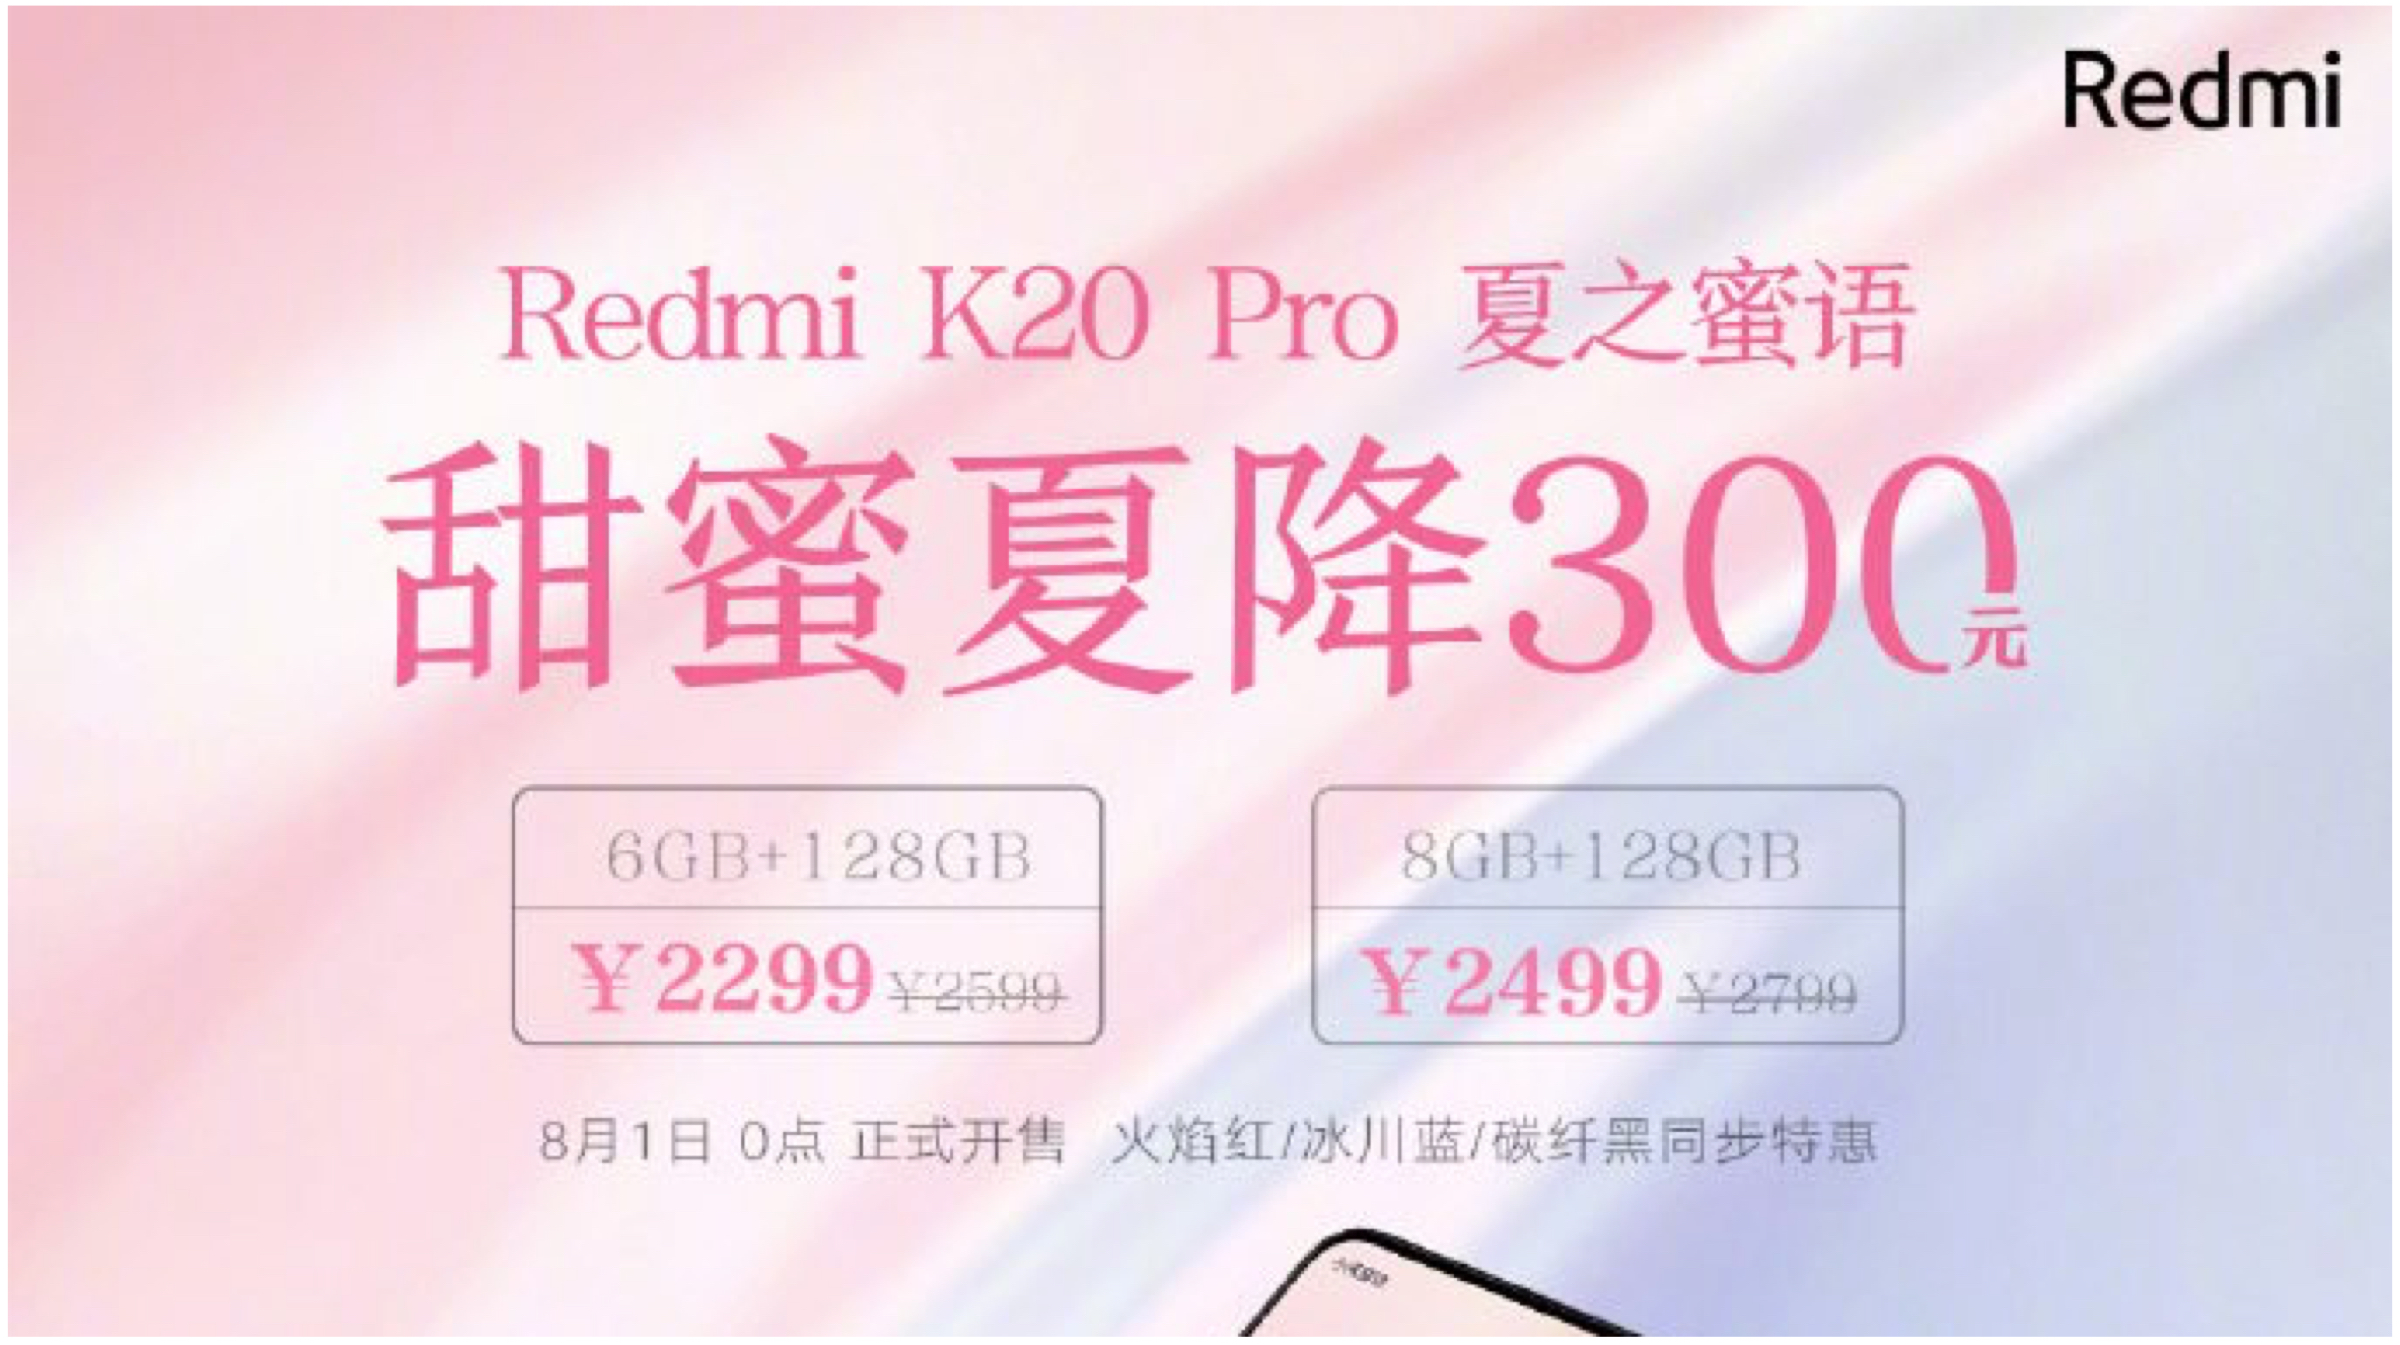 Redmi K20 Pro Снижение цен